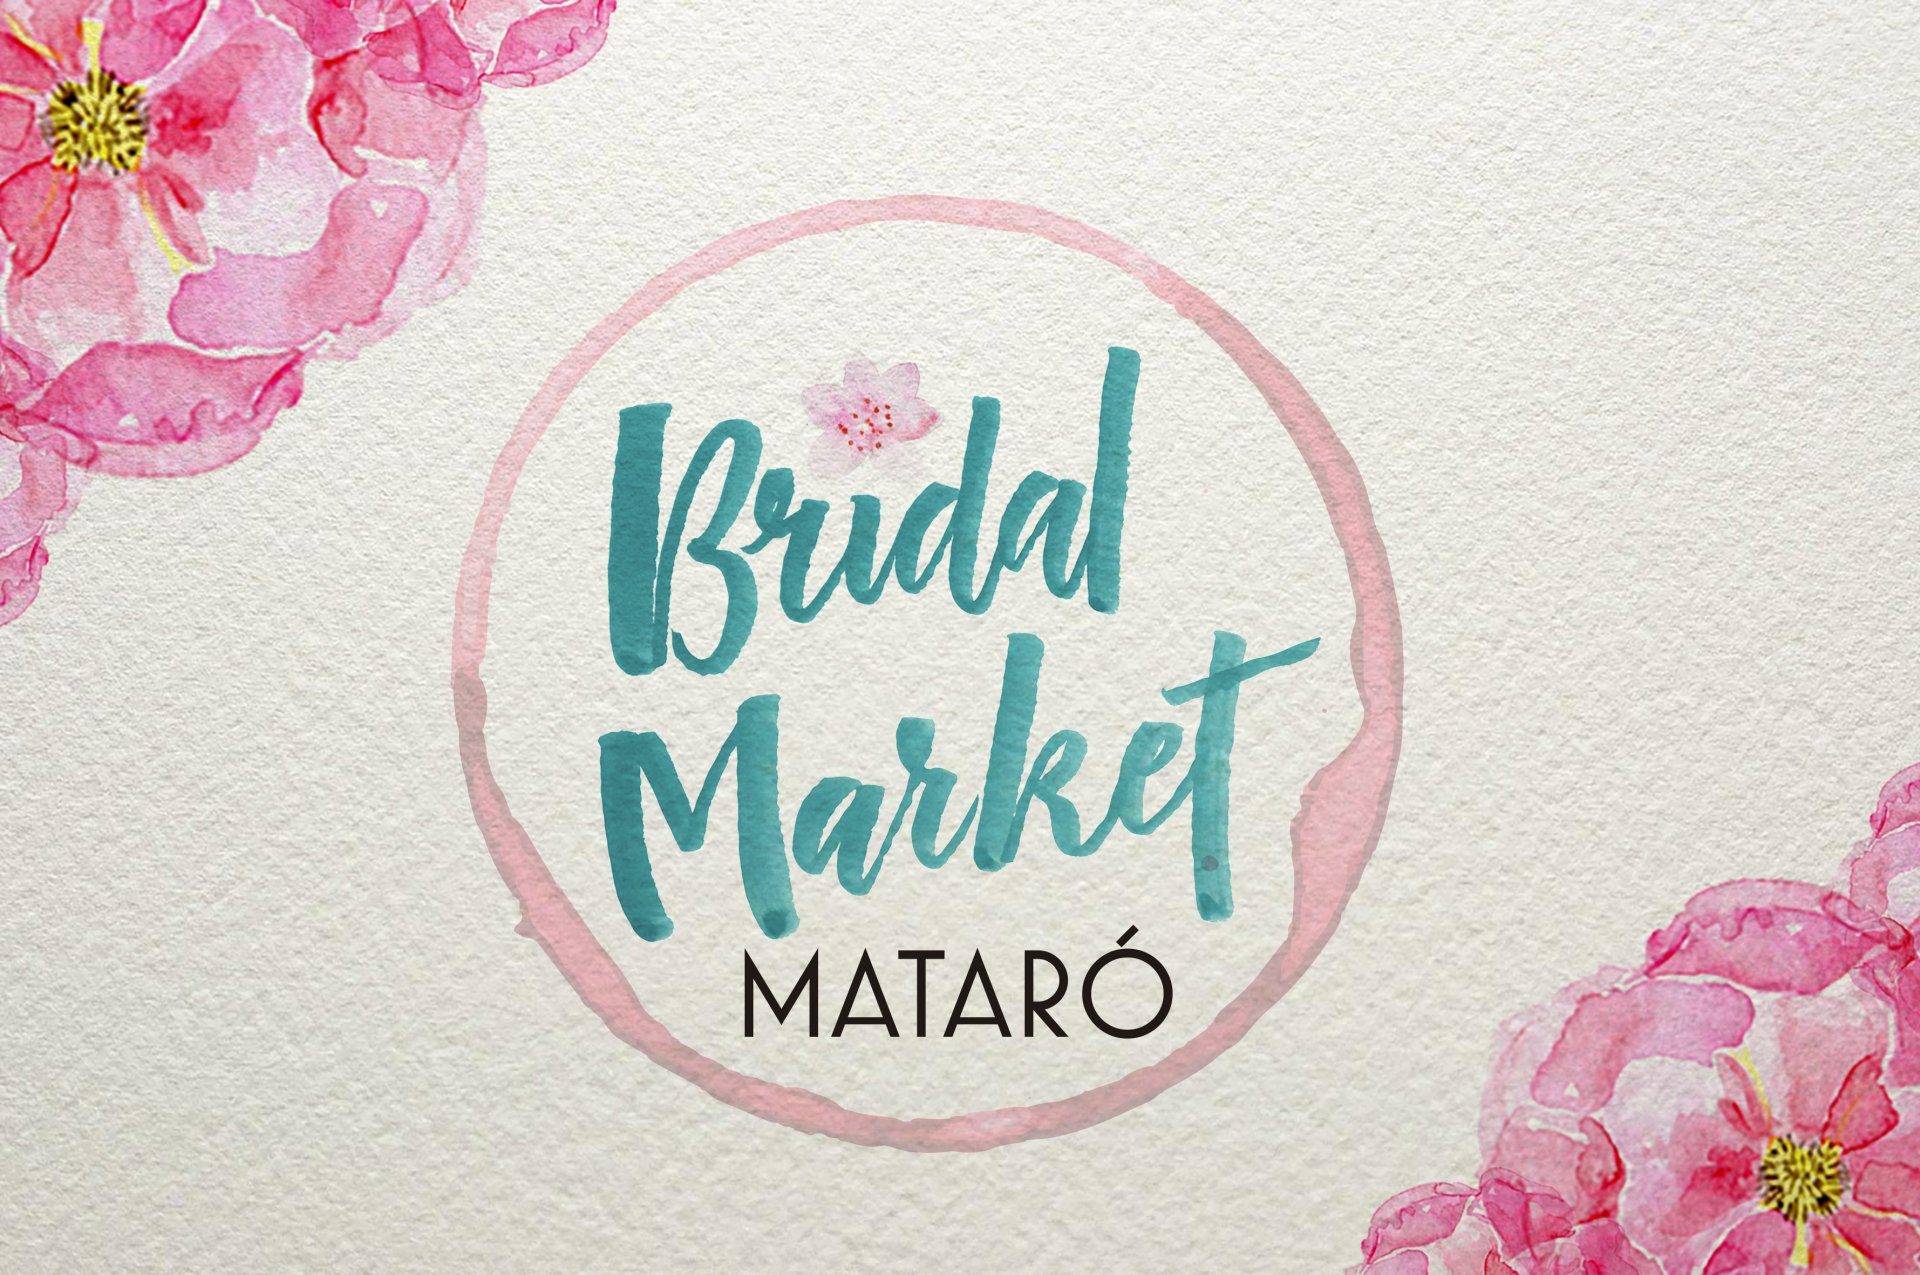 Bridal-Market-Mataro